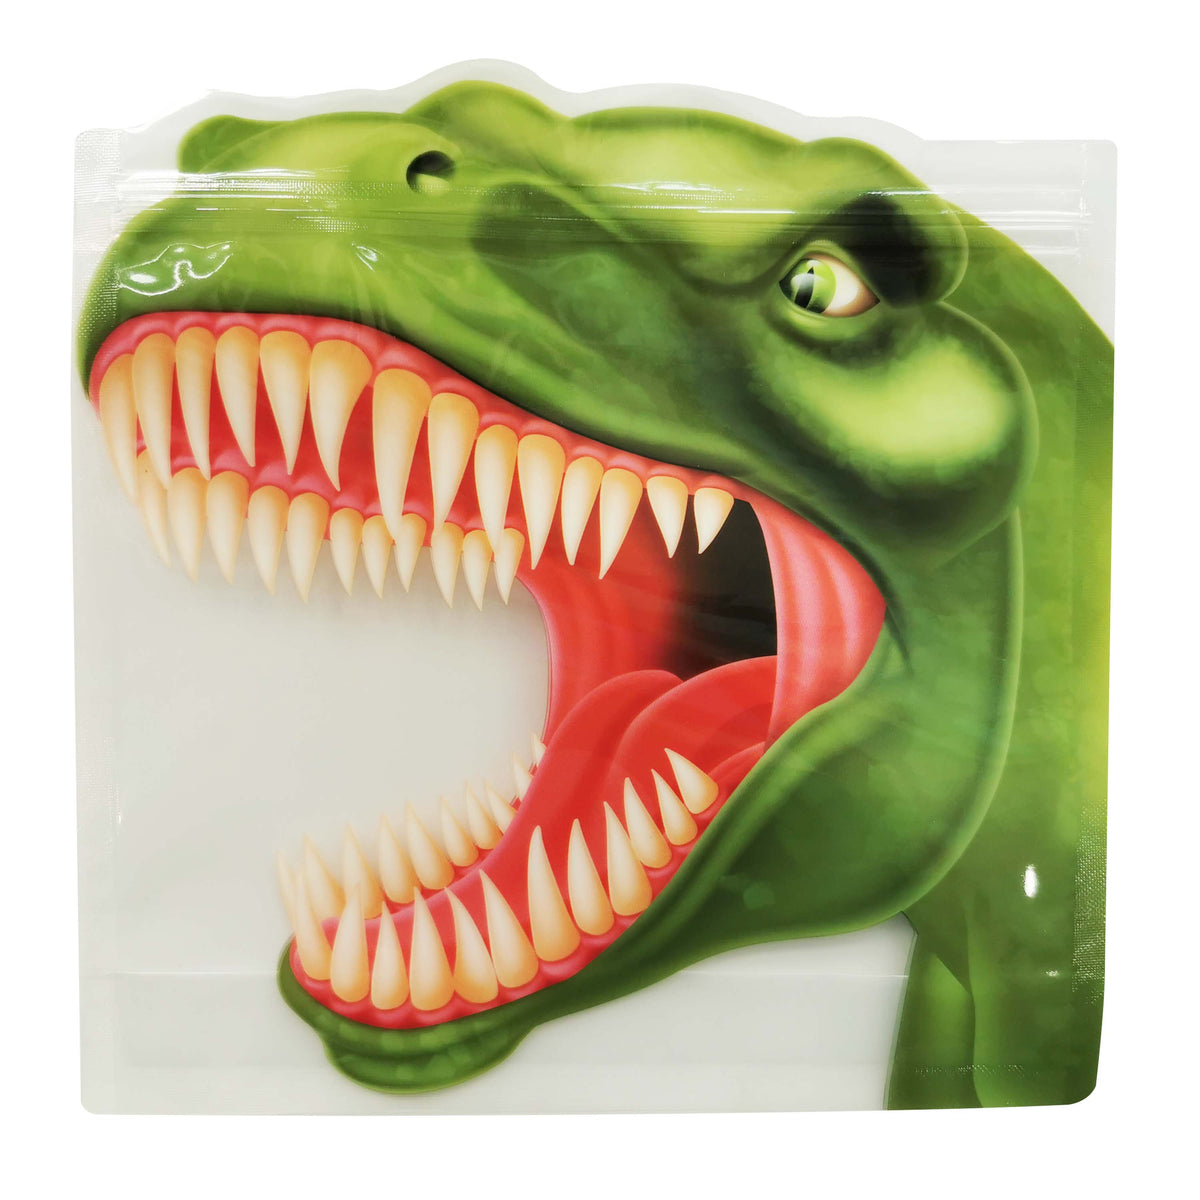 Reusable Zip Lock Bags - Dinosaurs